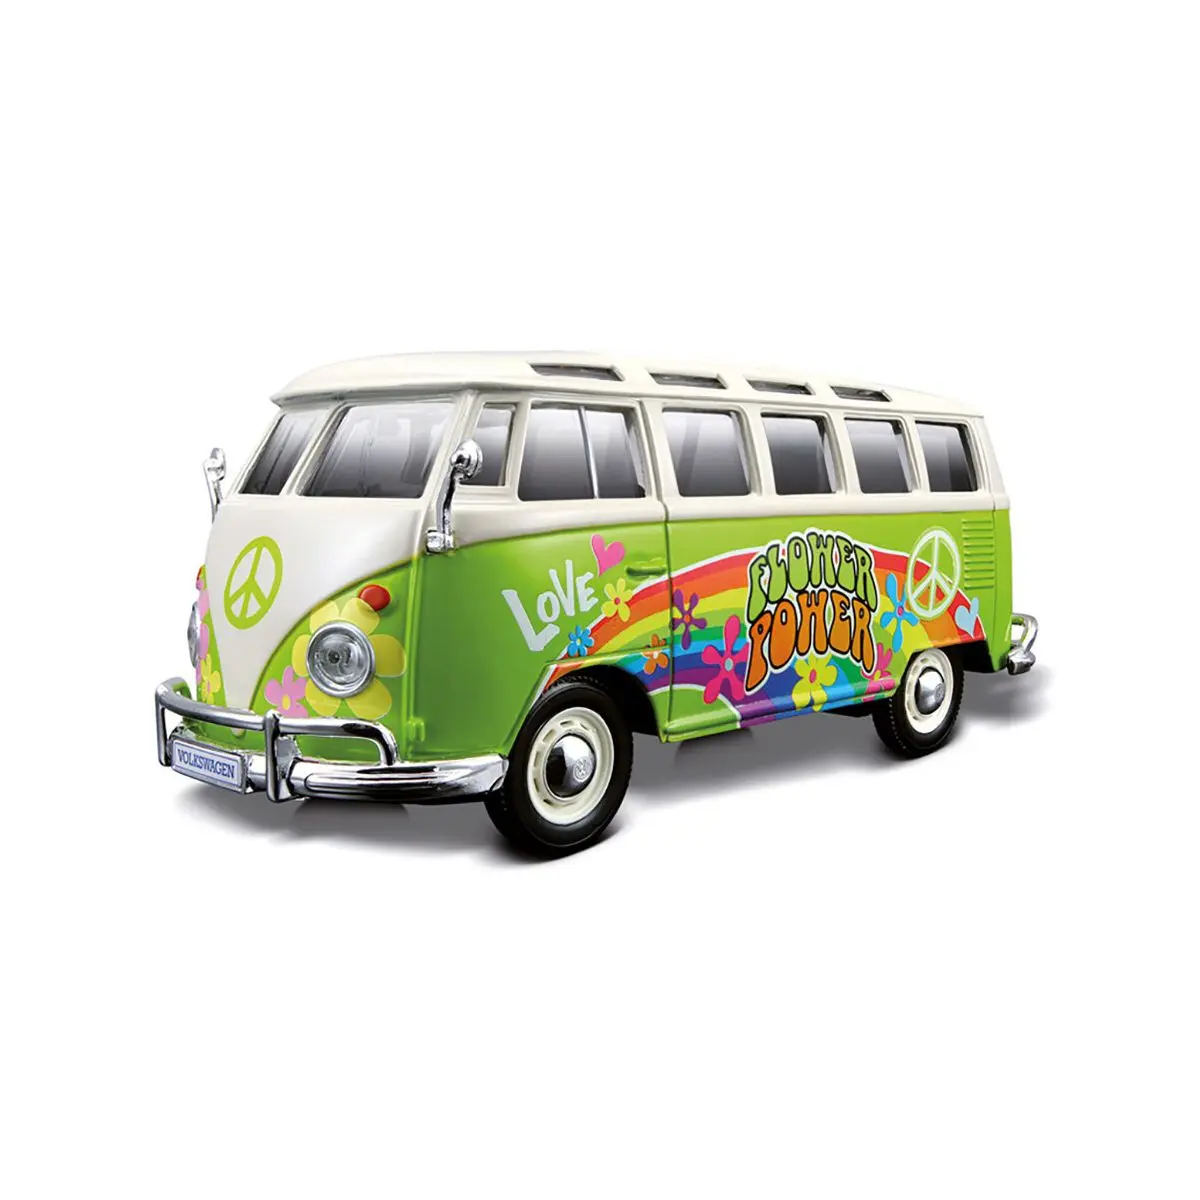 Model vozidla VW Bus Samba Hippie-Line